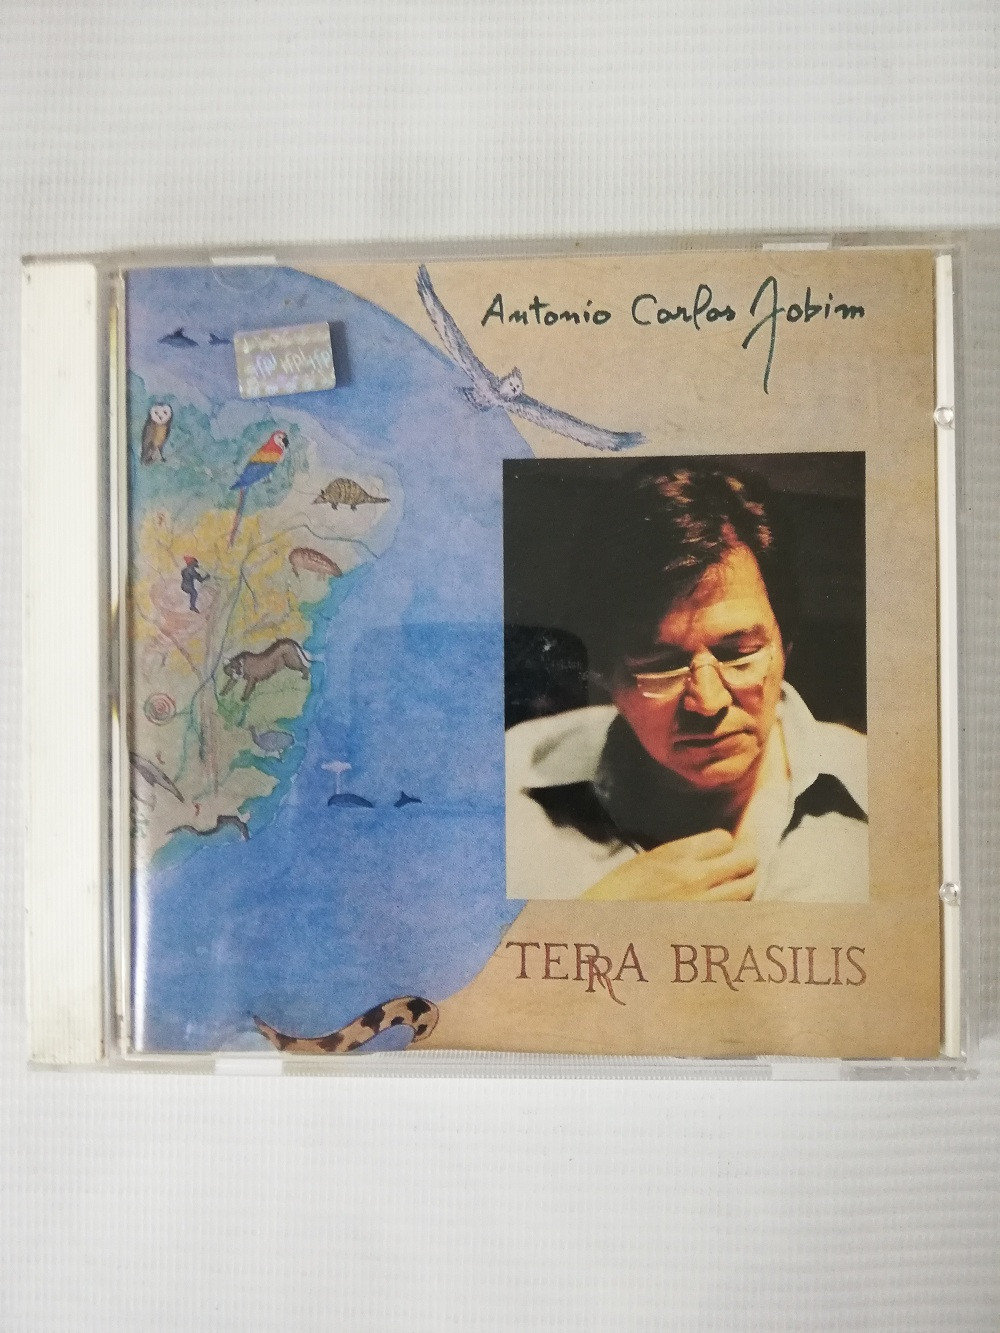 Imagen CD ANTONIO CARLOS JOBIM - TERRA BRASILIS 1